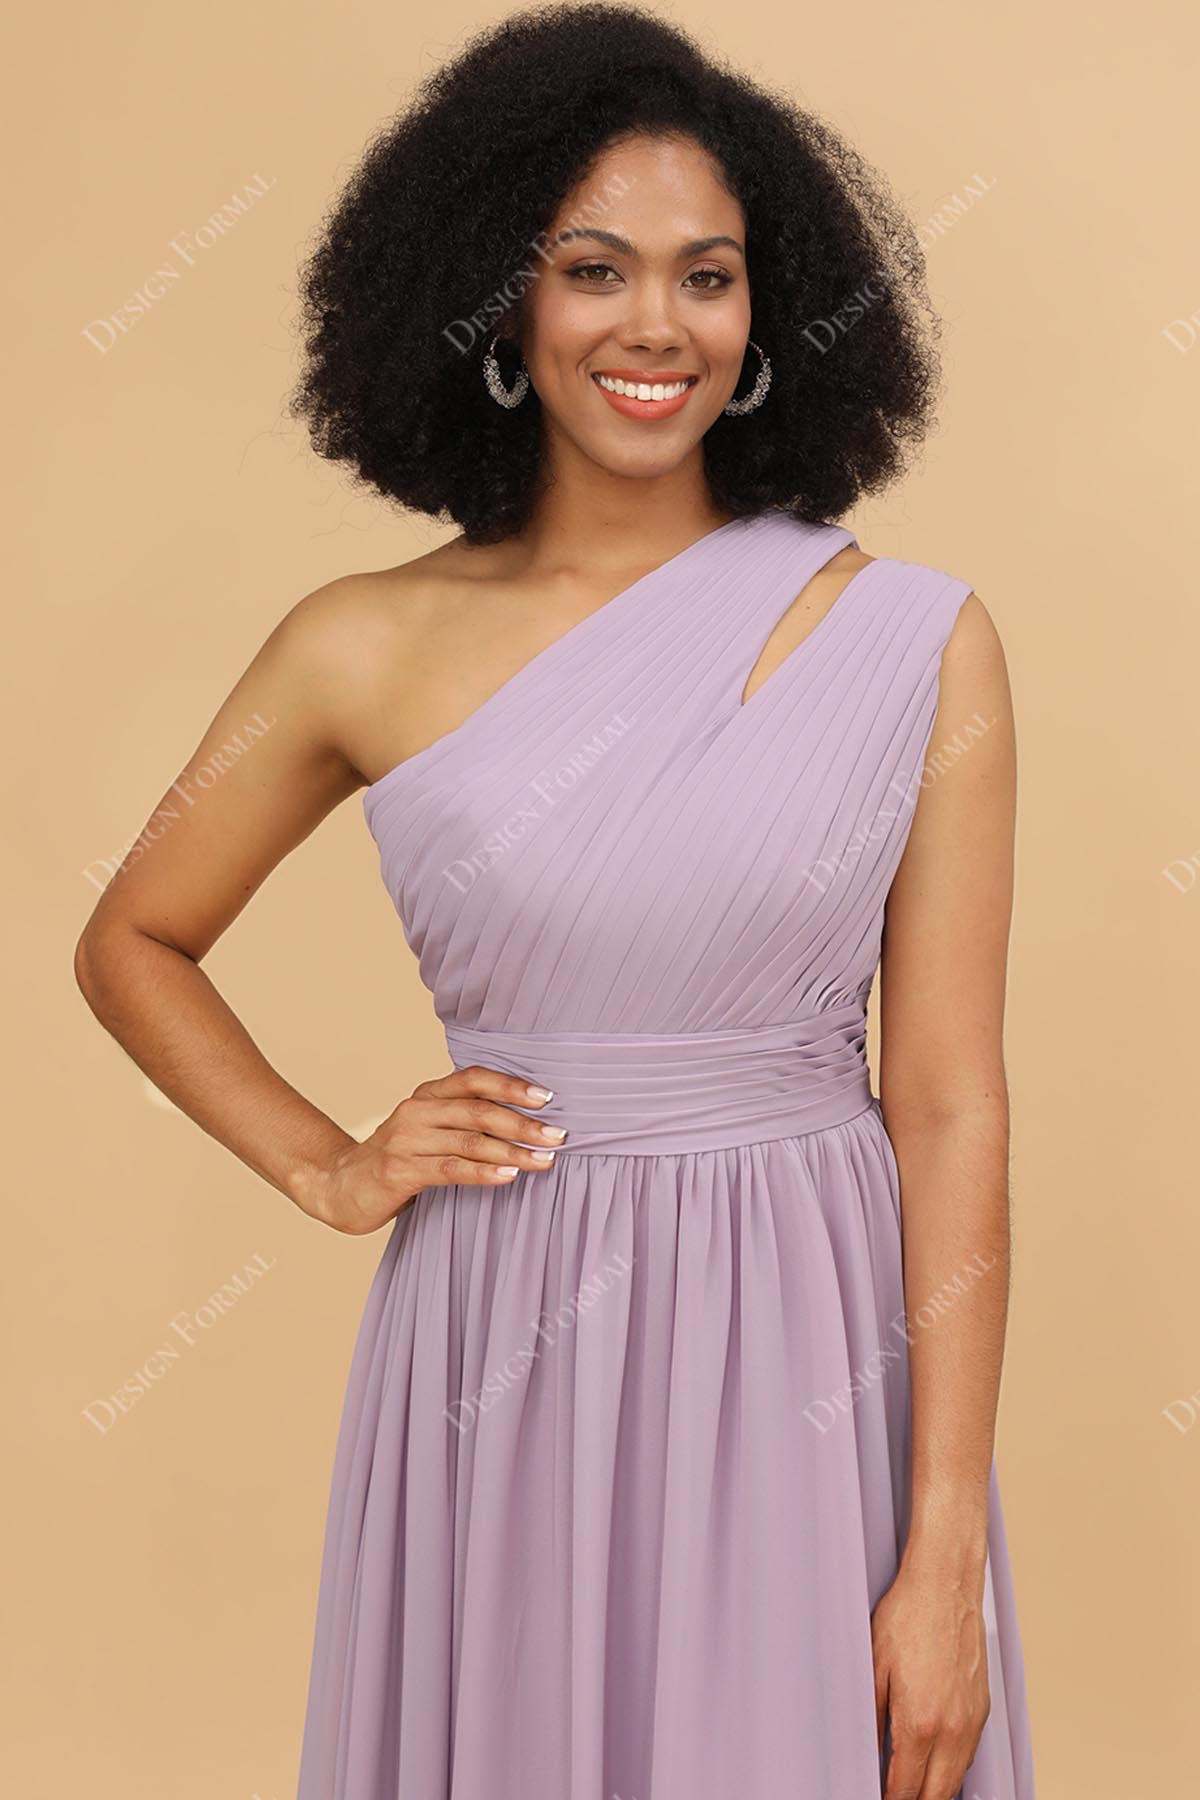 wisteria sleeveless chiffon purple one shoulder bridesmaid gown